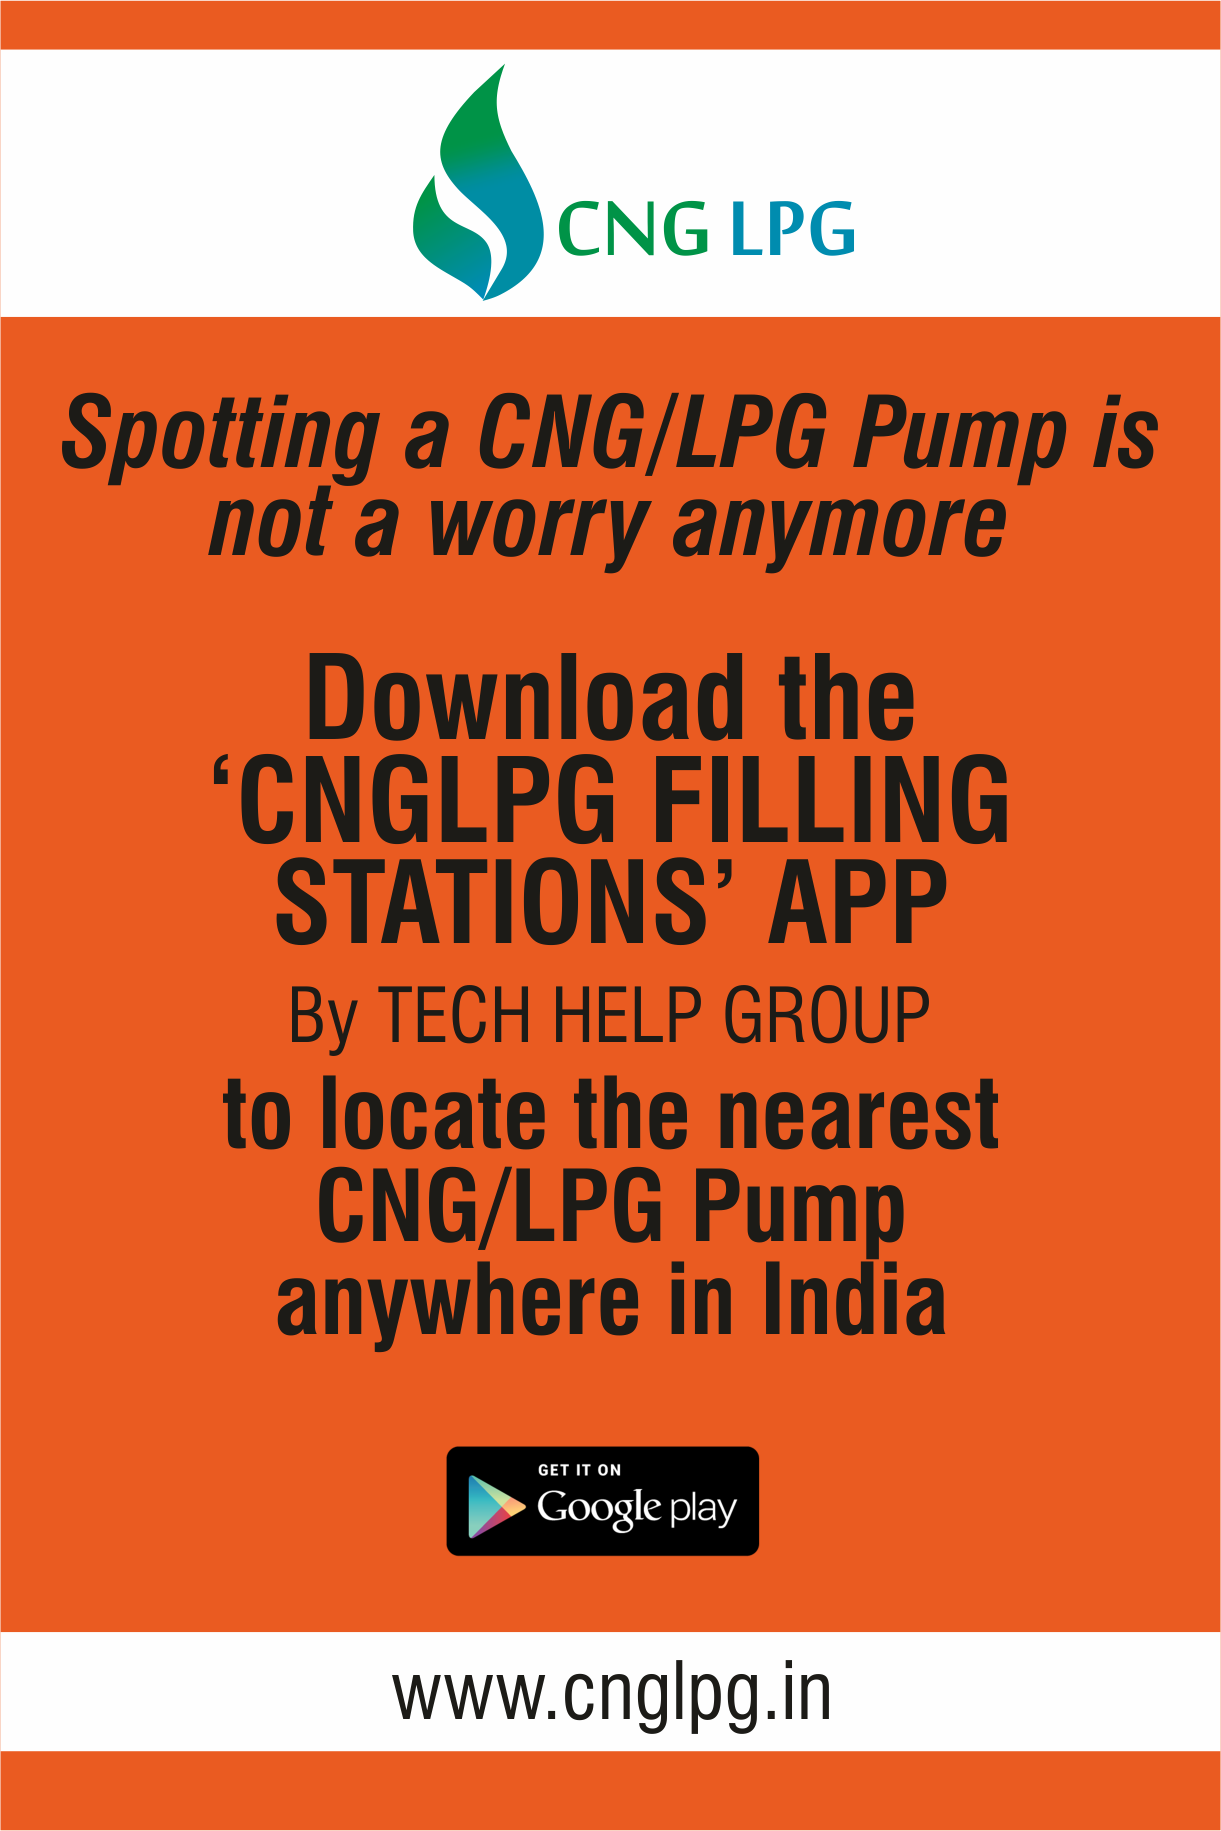 cng lpg pump locater app